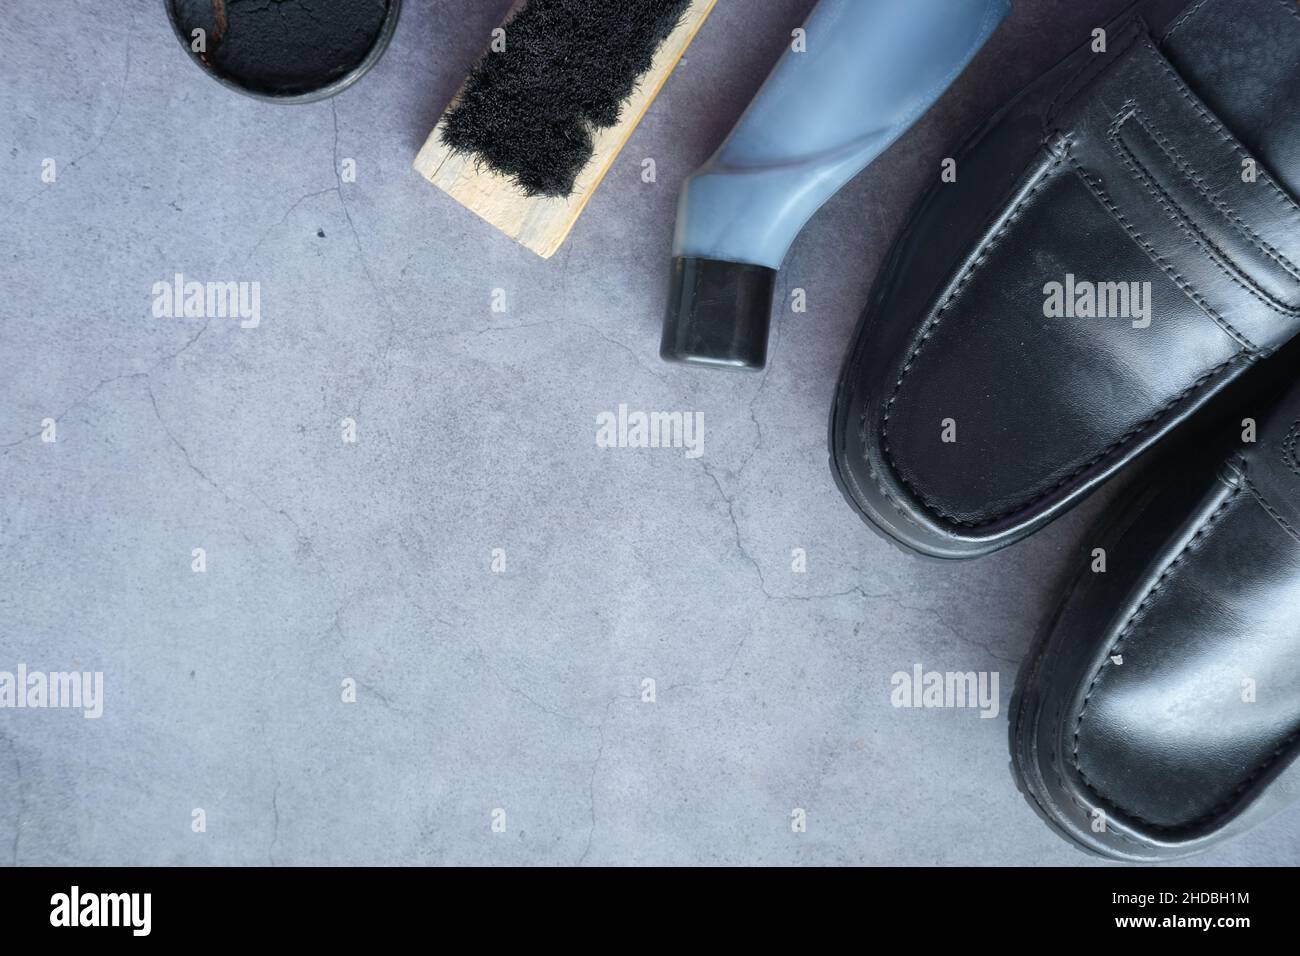 cleaning Shoe brush and shoe on black background  Stock Photo